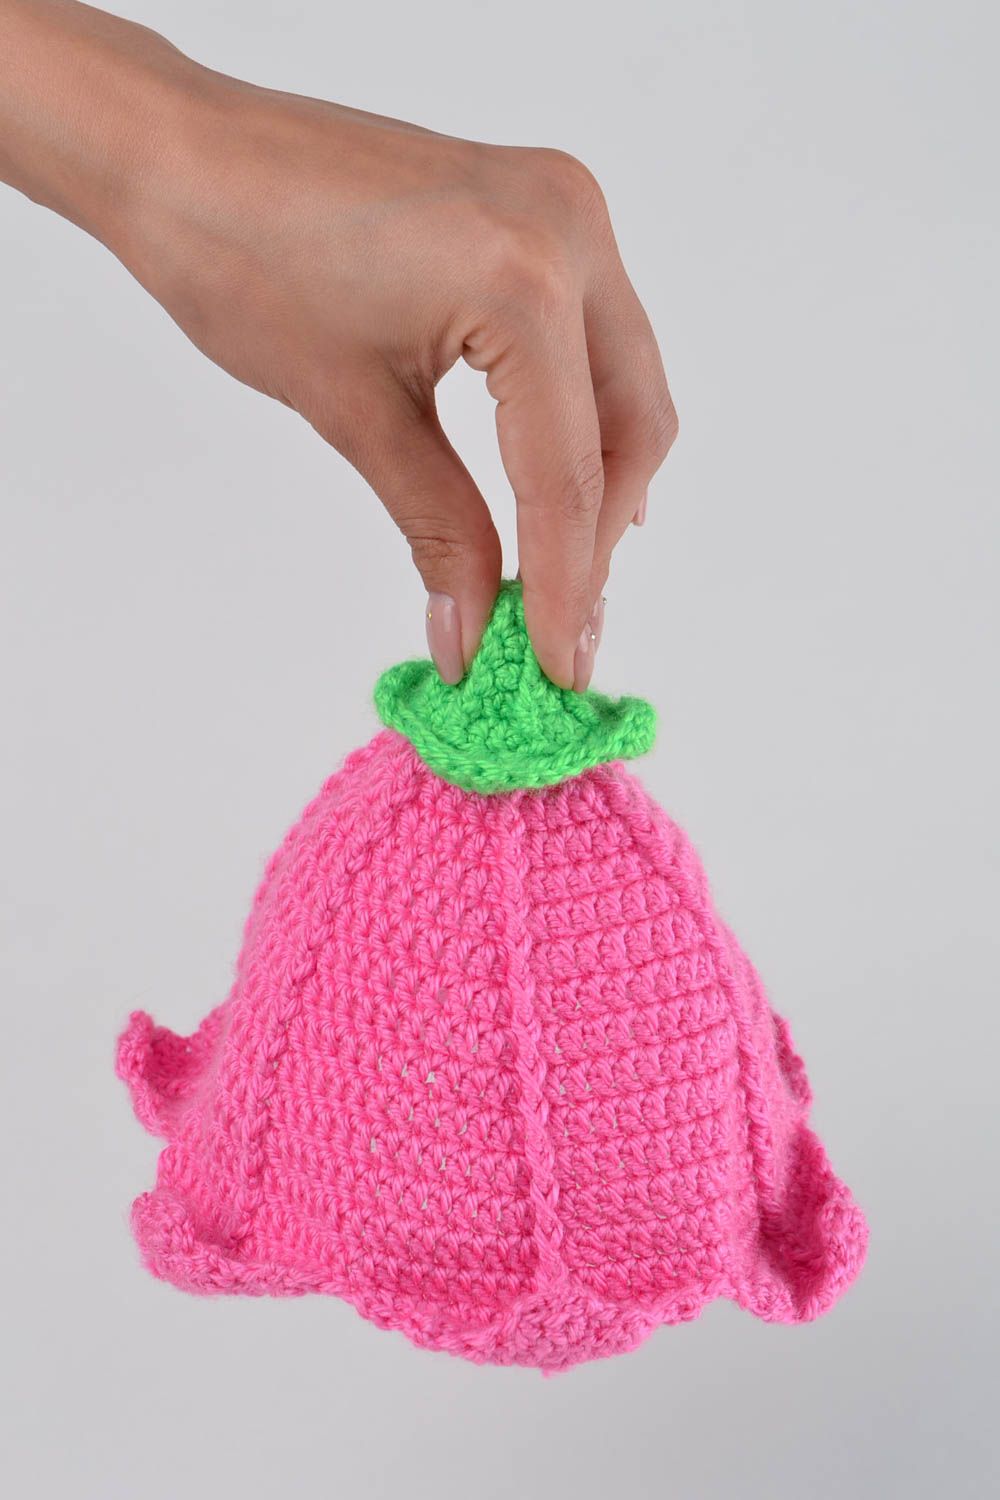 Handmade hat crocheted hat baby hat designer hat winter beanie gift for baby photo 2